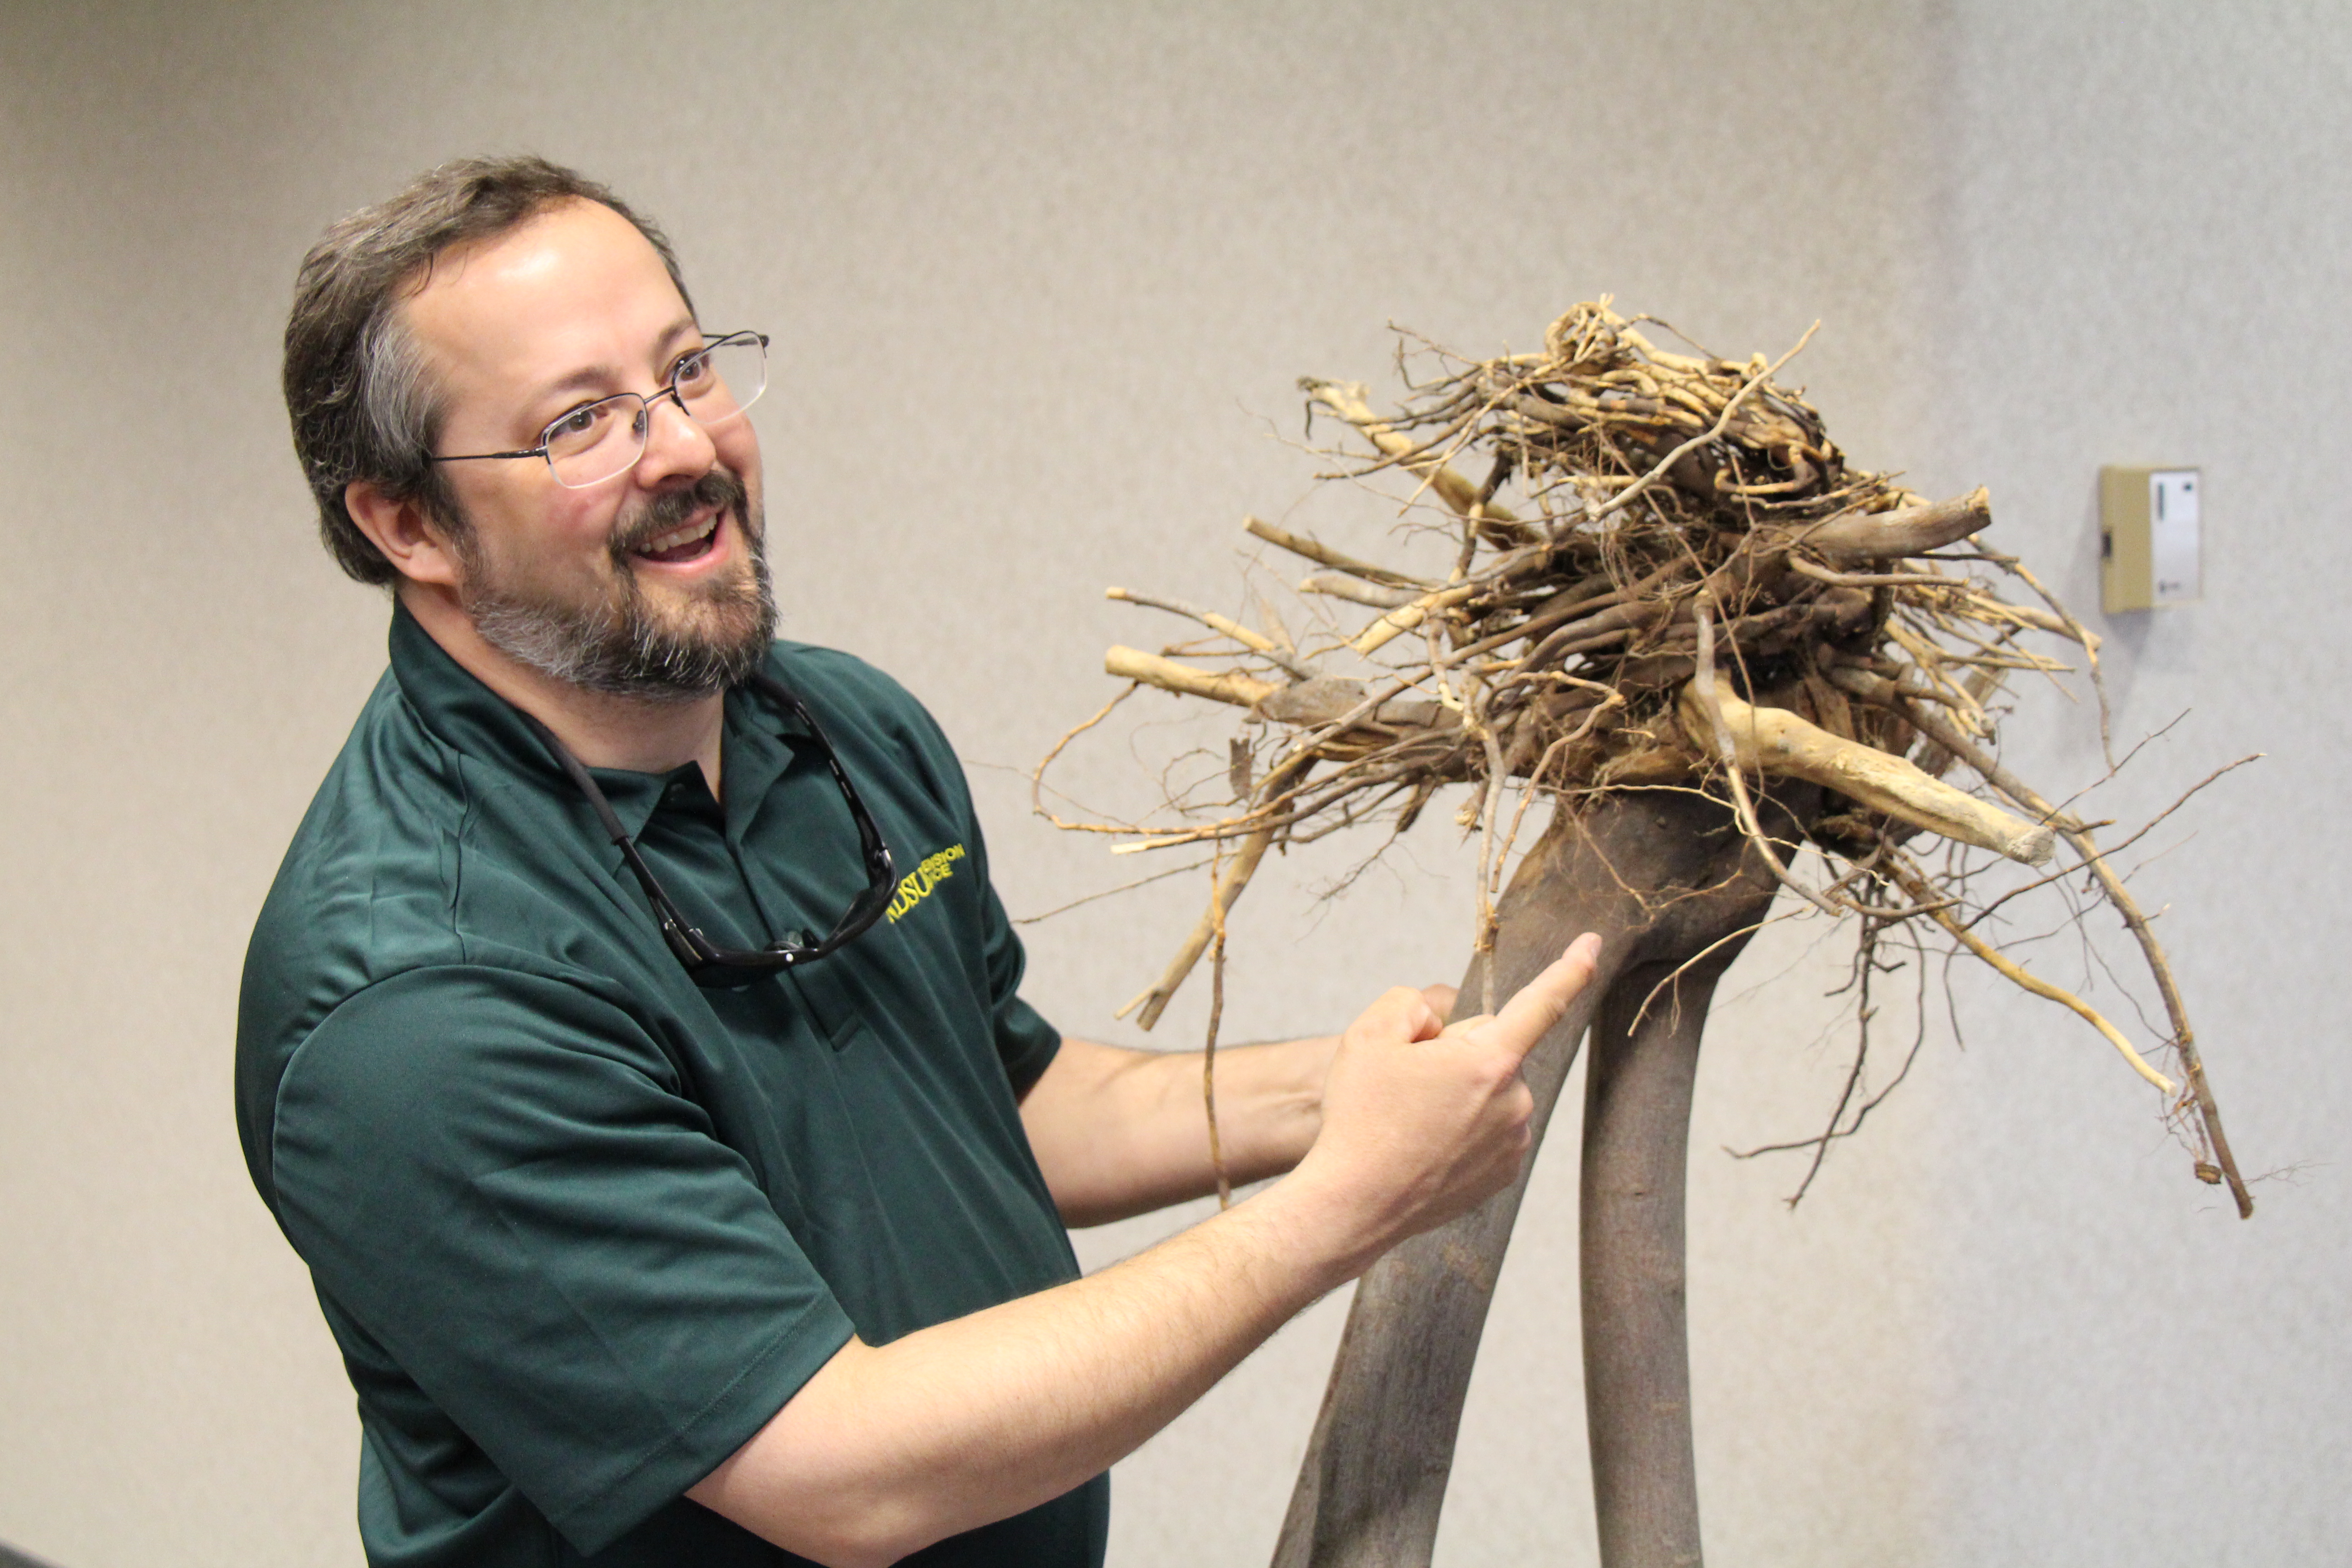 Speaker showing tree roots